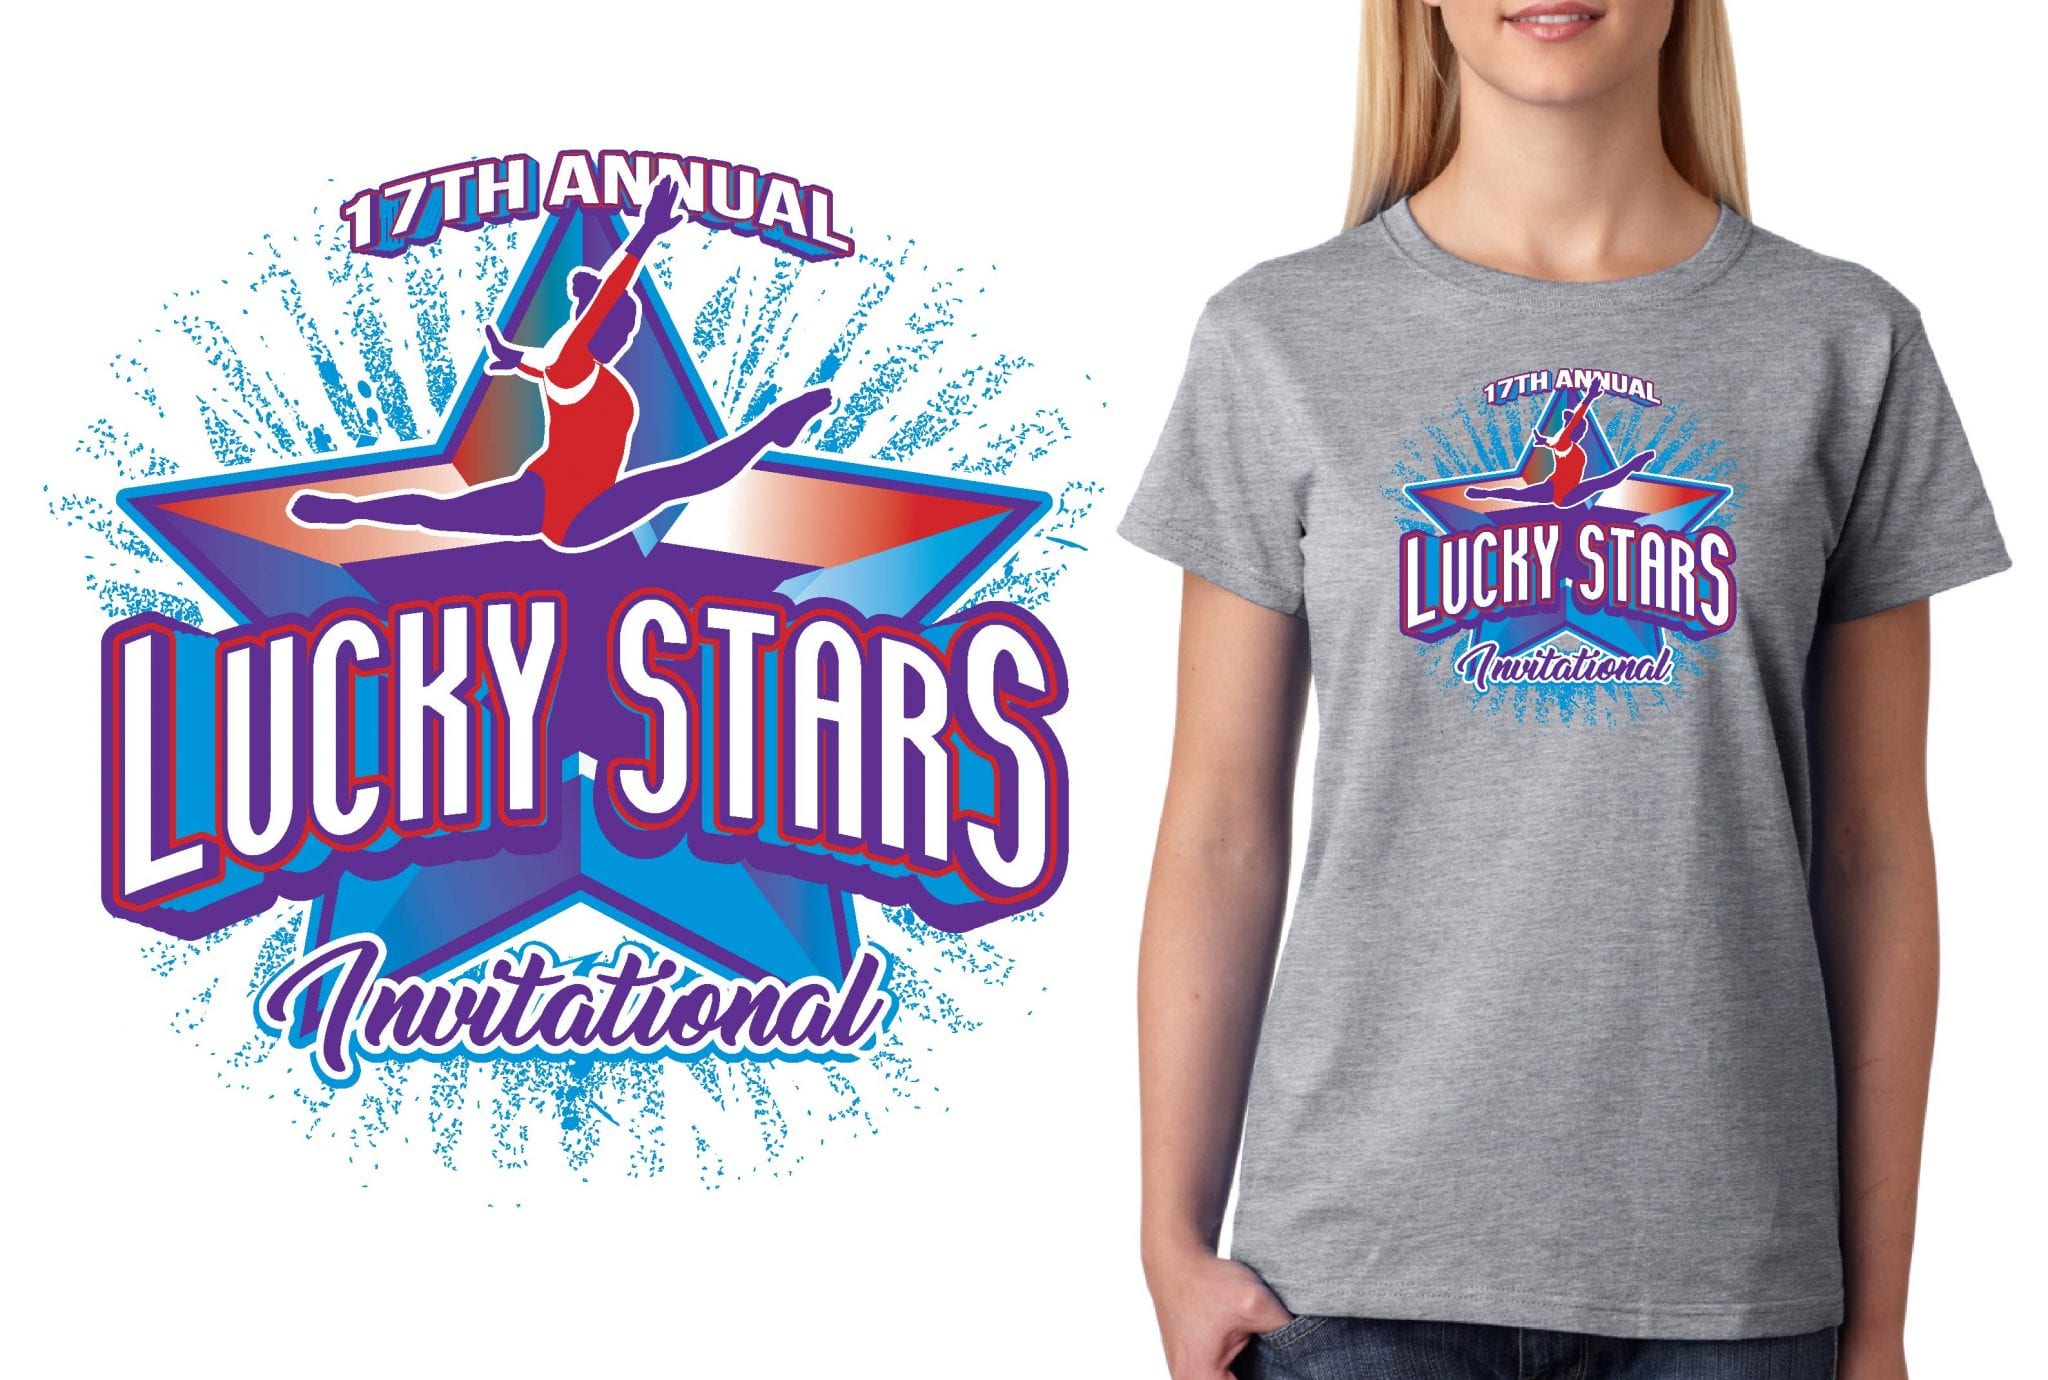 GYMNASTICS LOGO for Lucky Stars Invitational allie gymnastics T-SHIRT UrArtStudio